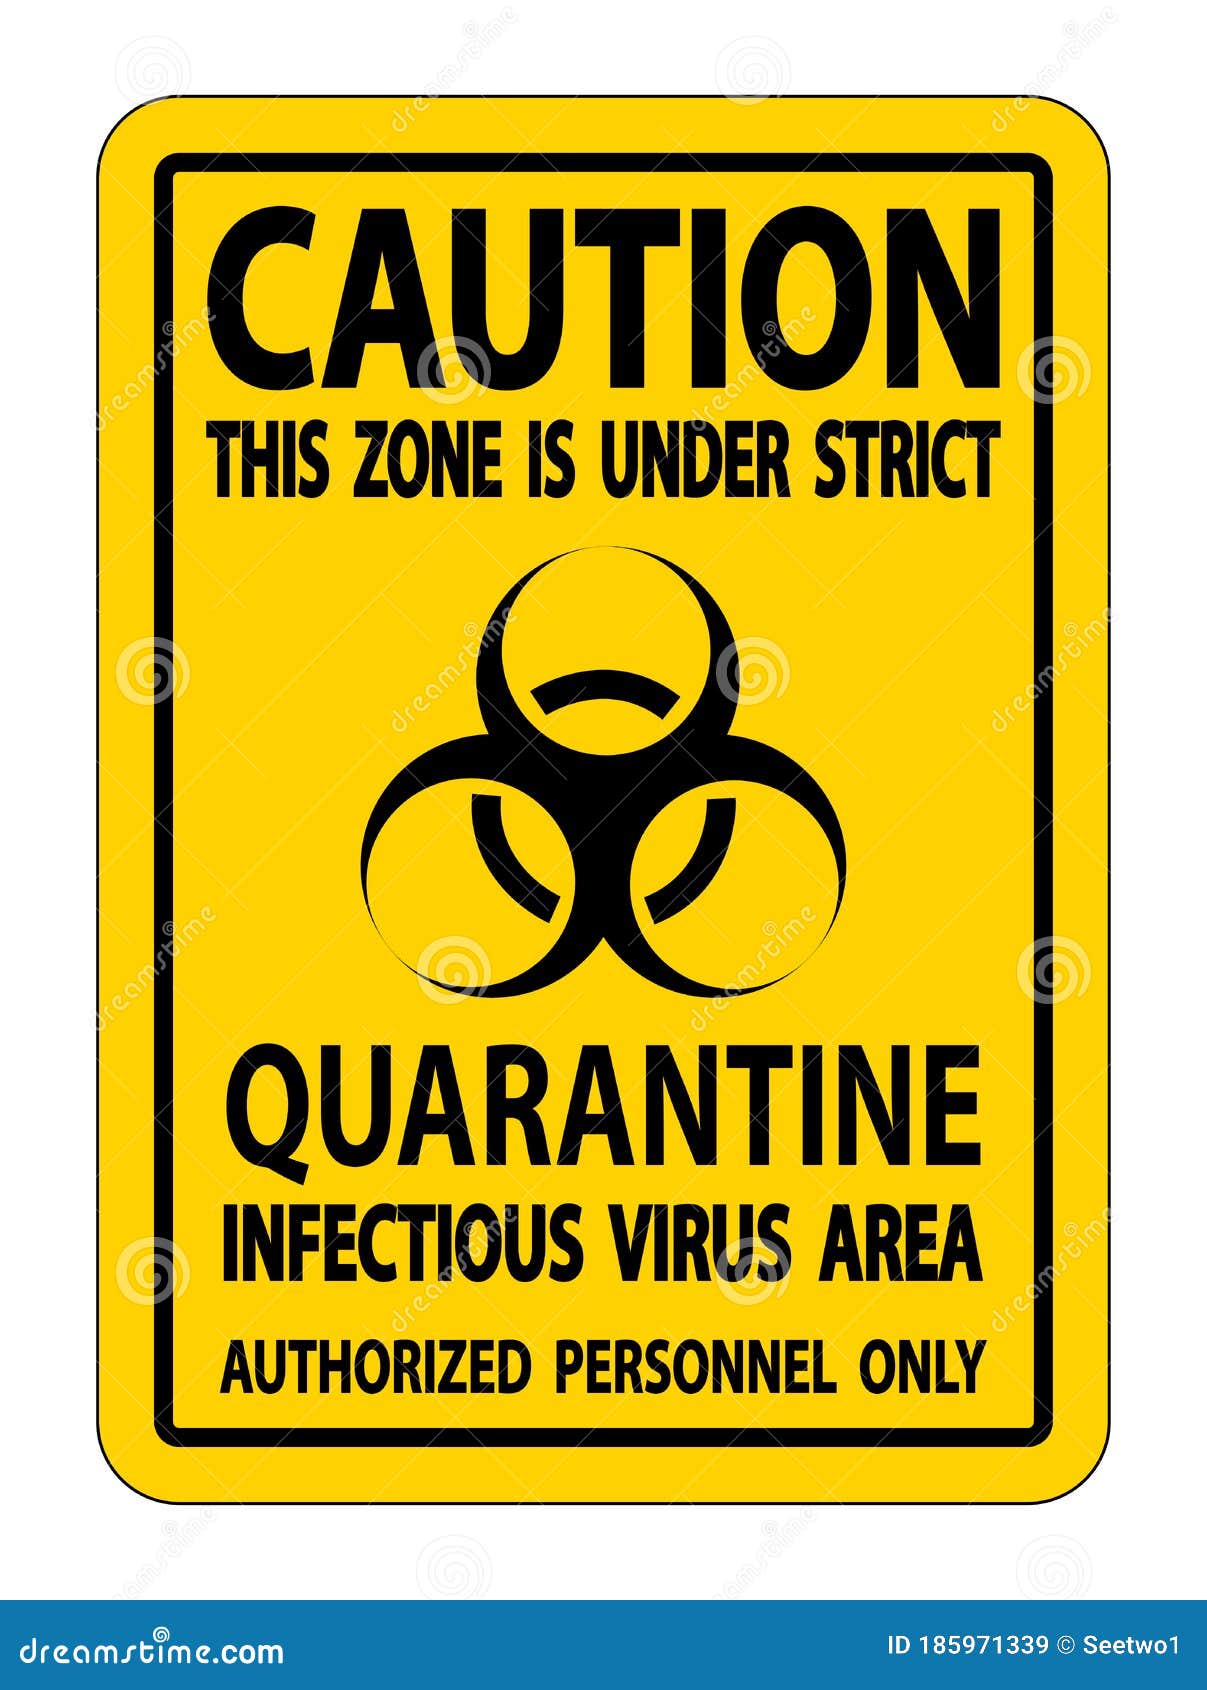 Caution Quarantine Infectious Virus Area Sign Isolate on White ...